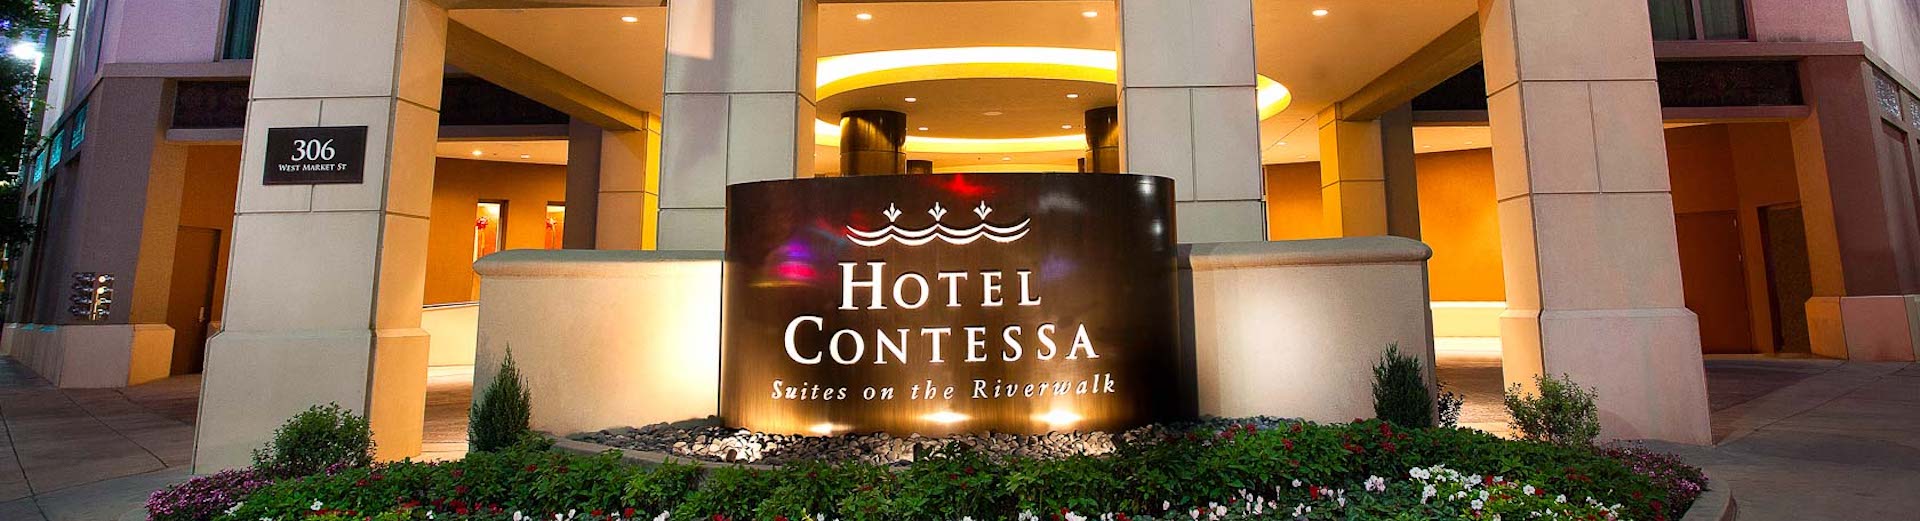 entrance to hotel contessa at night